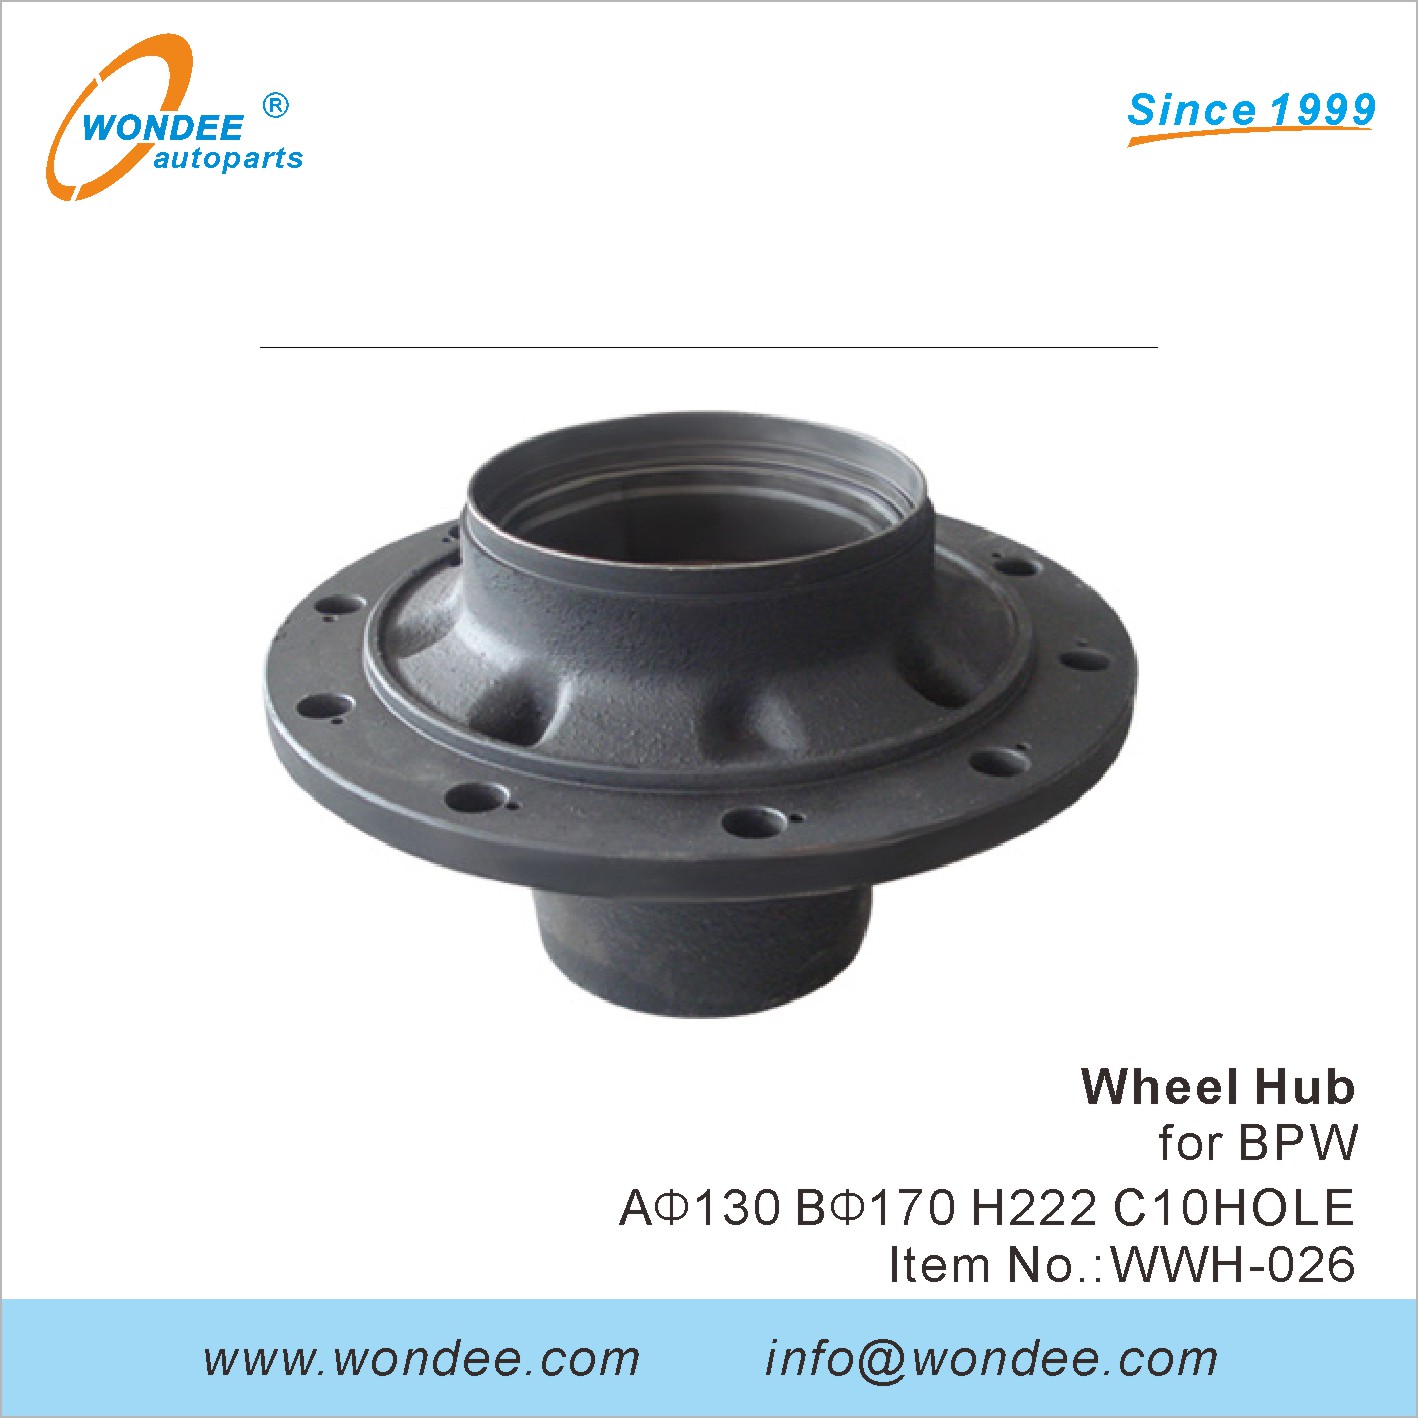 WONDEE wheel hub (26)